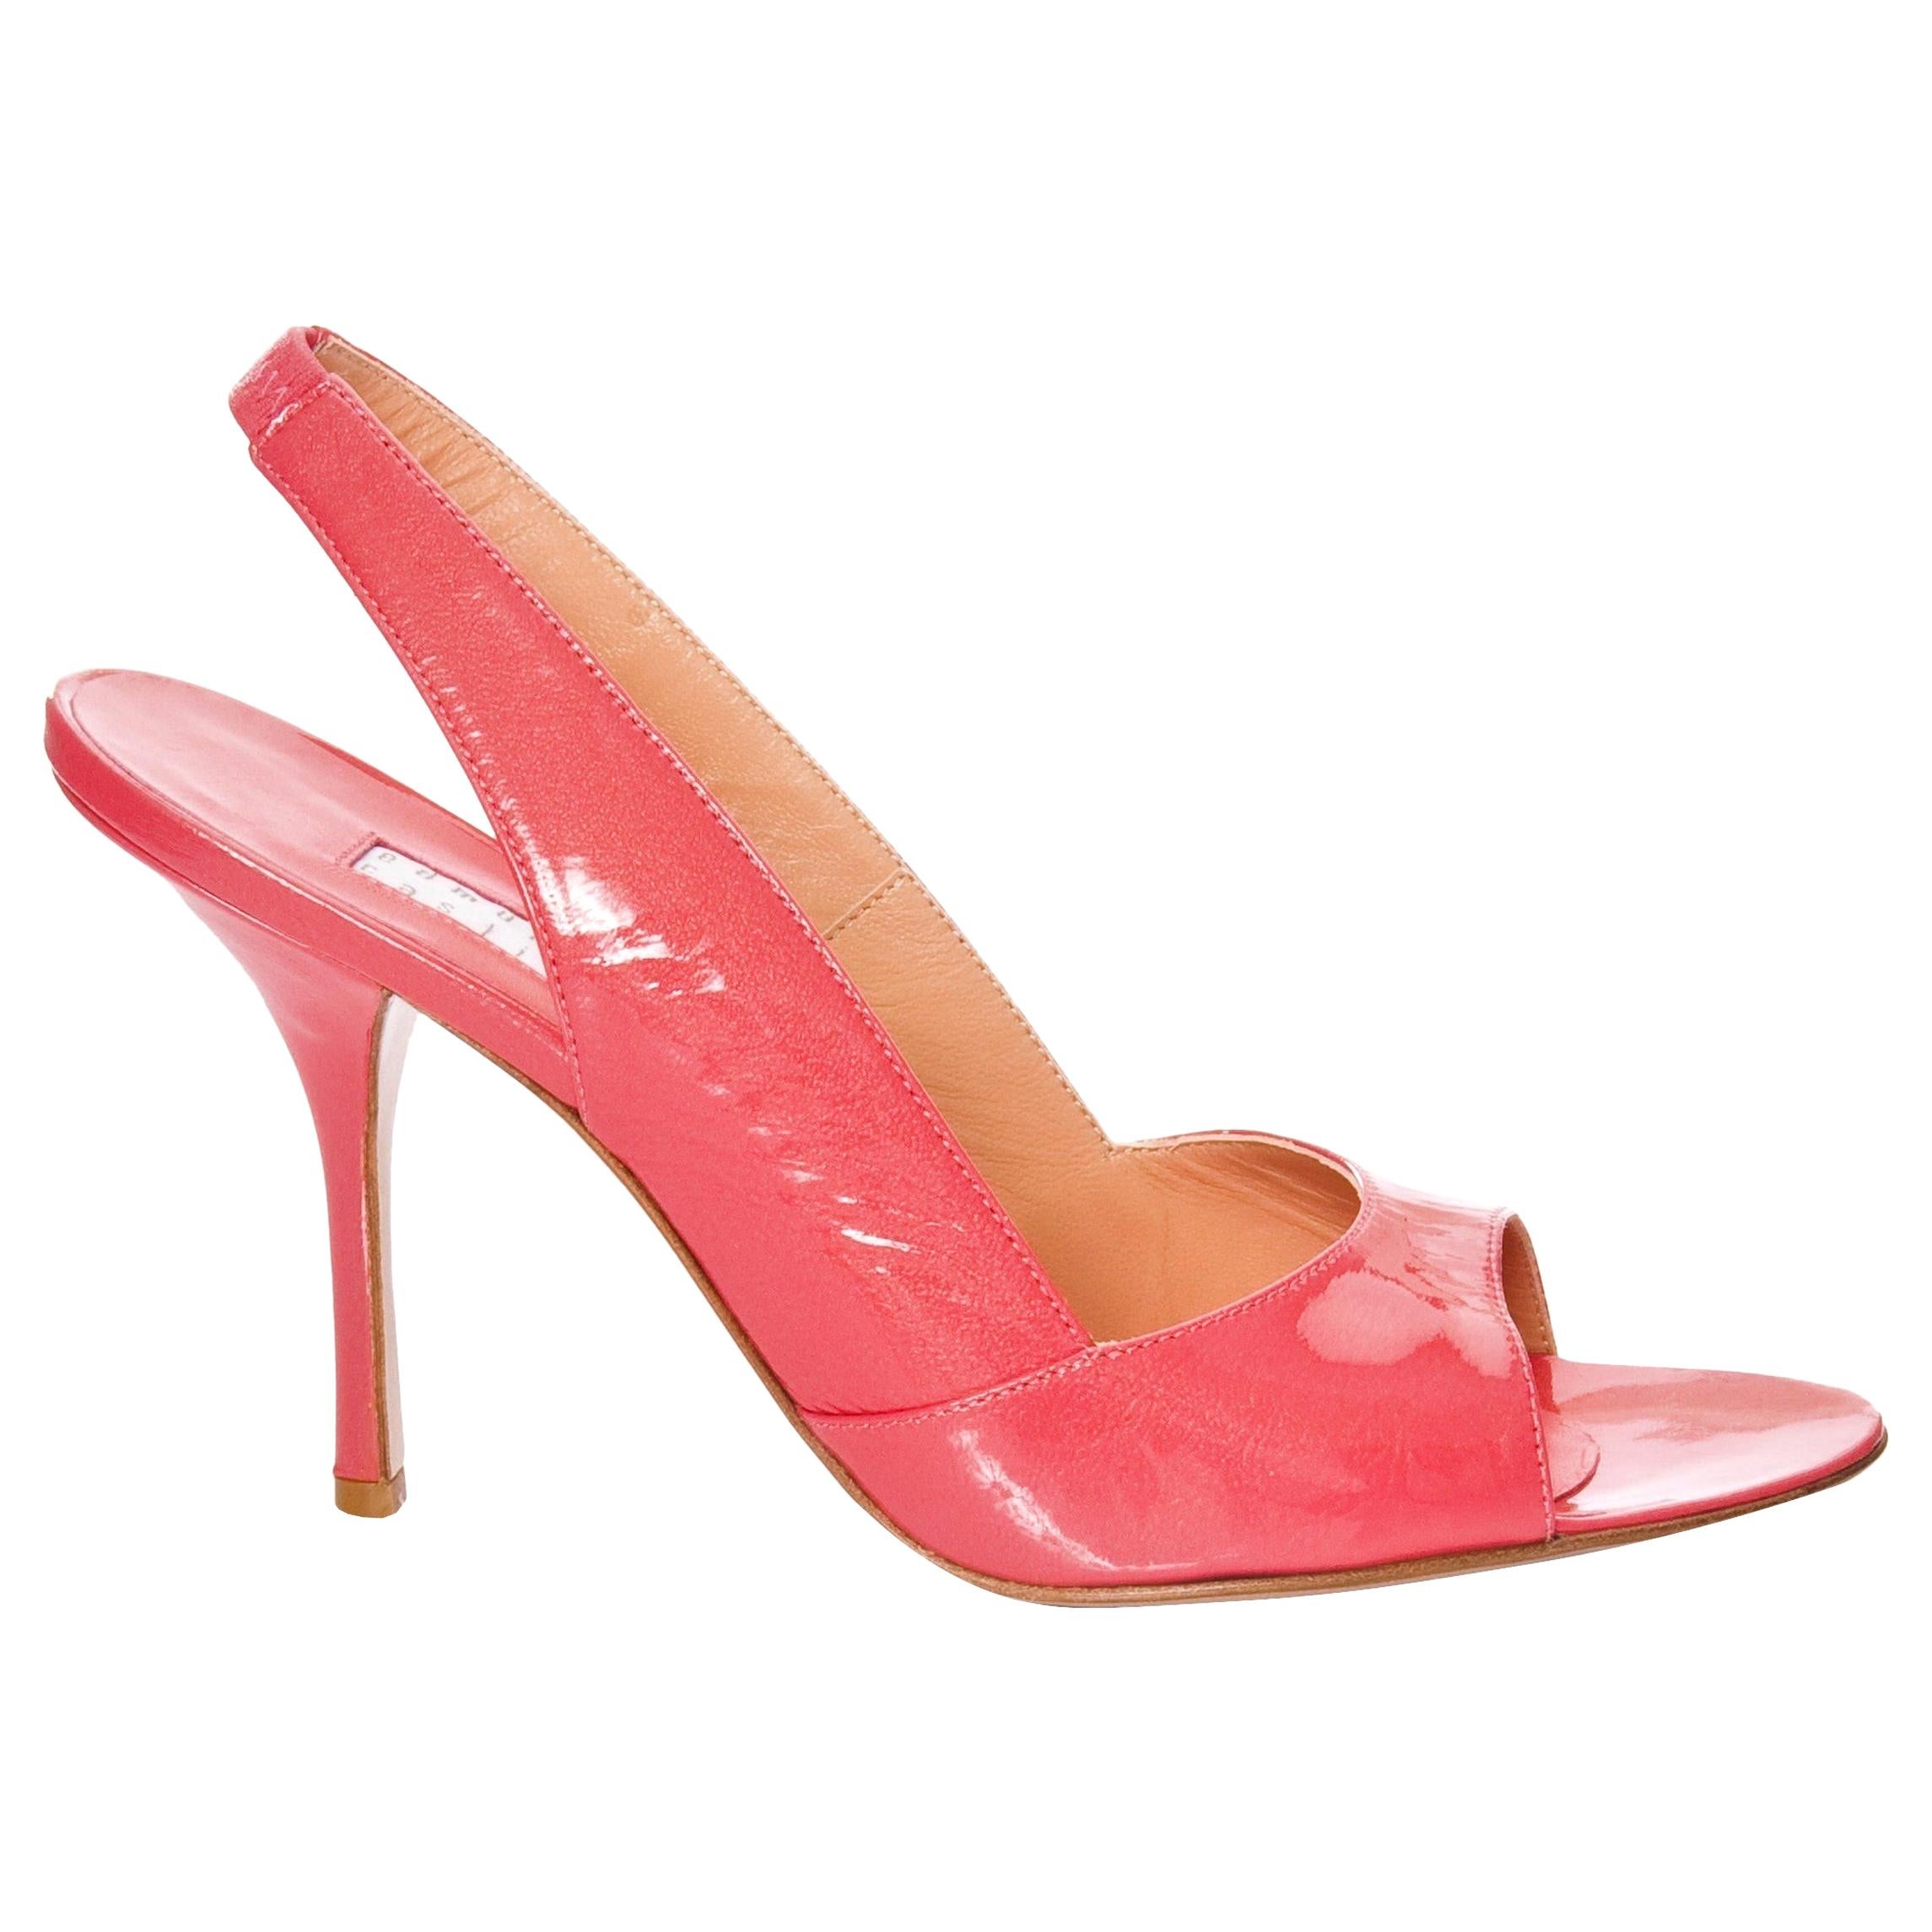 New Edmundo Castillo Coral Patent Leather Sling Heels